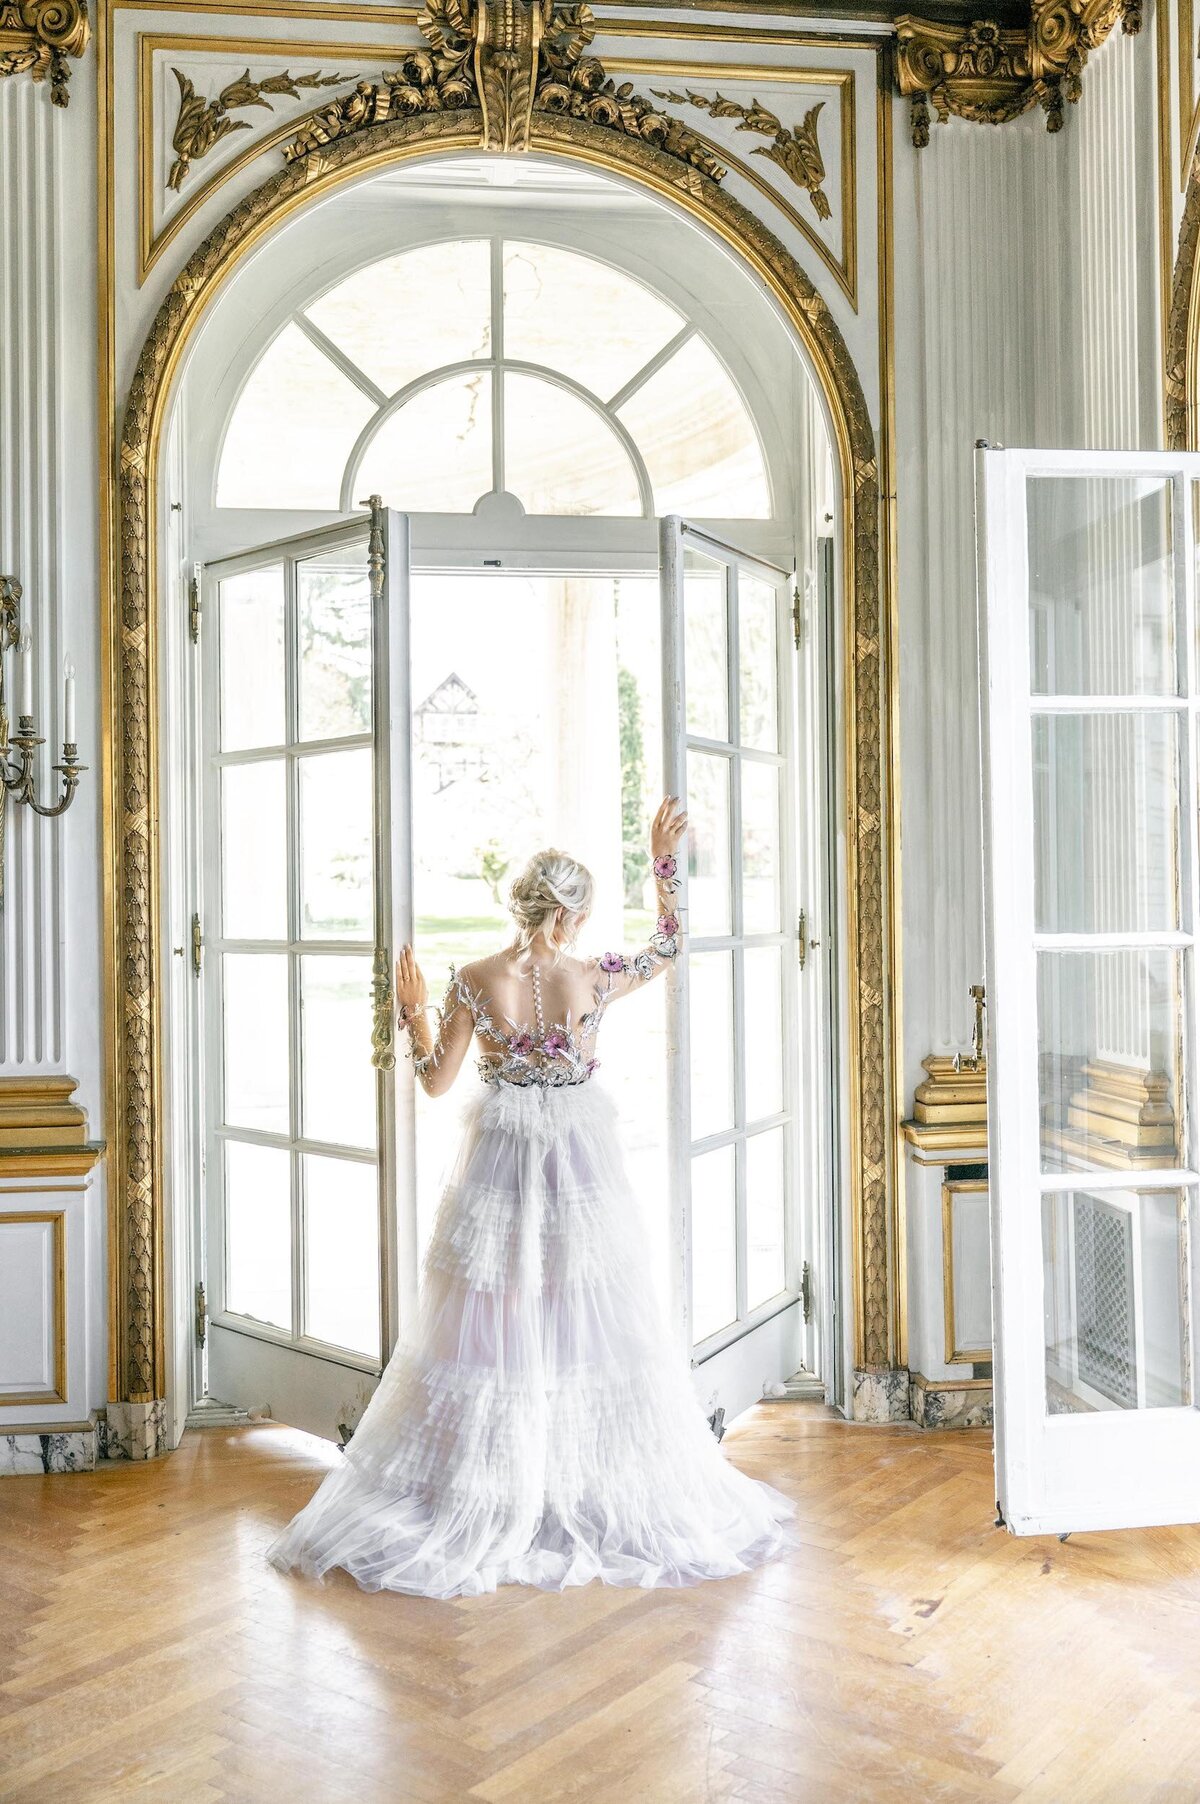 Bride opening french doors